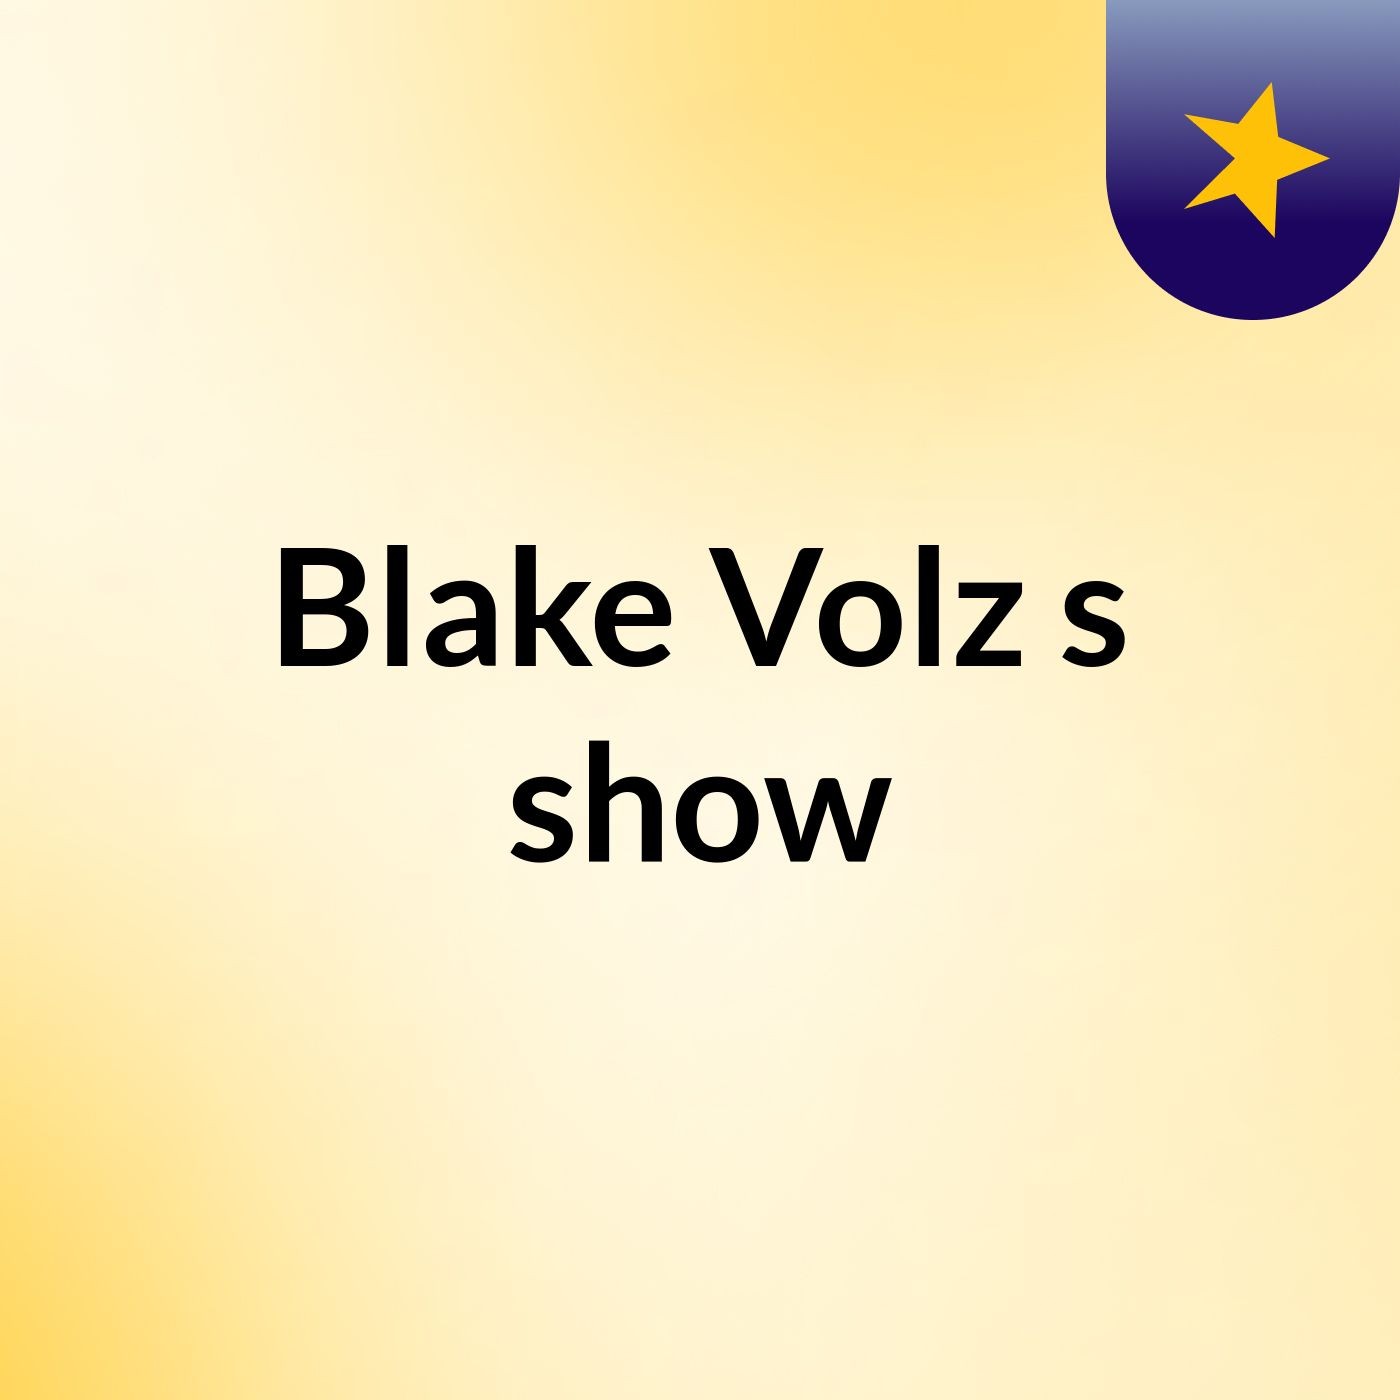 Episode 32 - Blake Volz's show